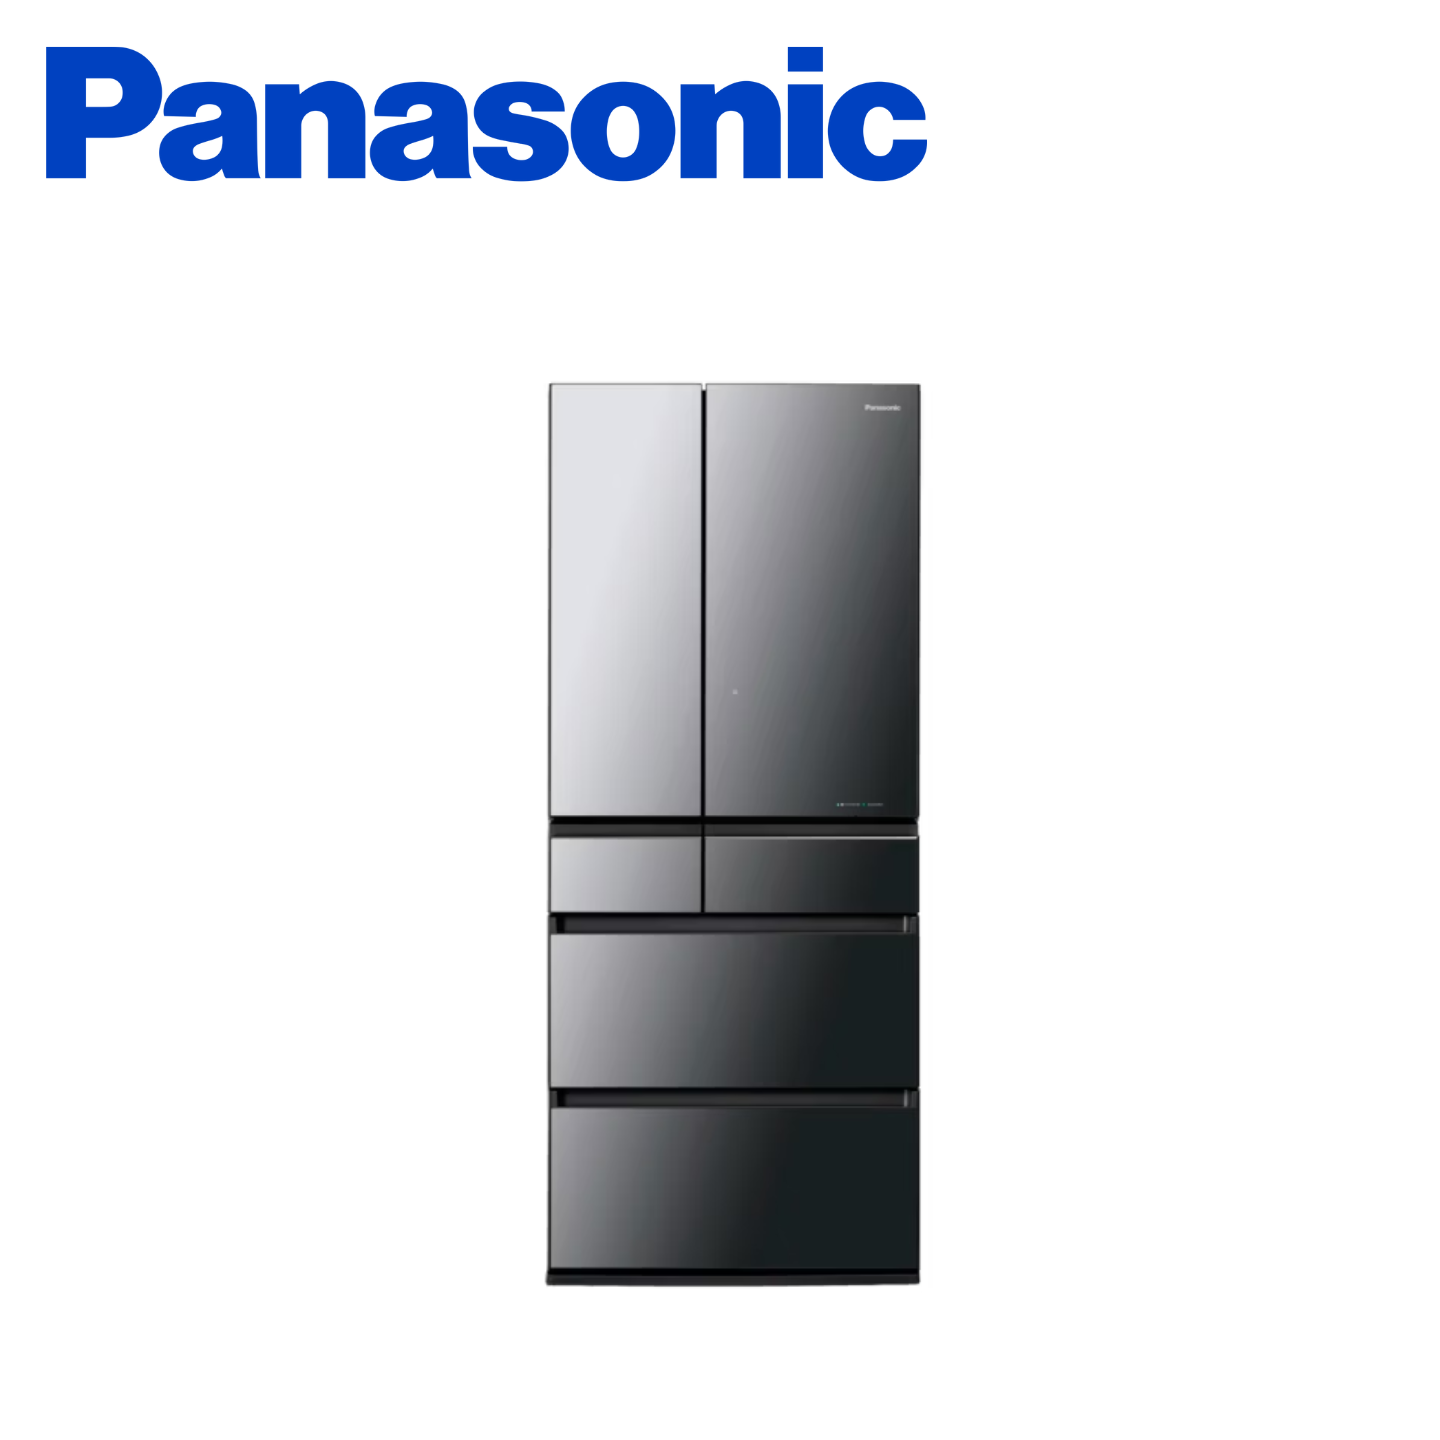 Panasonic NR-F654GT Refrigerator